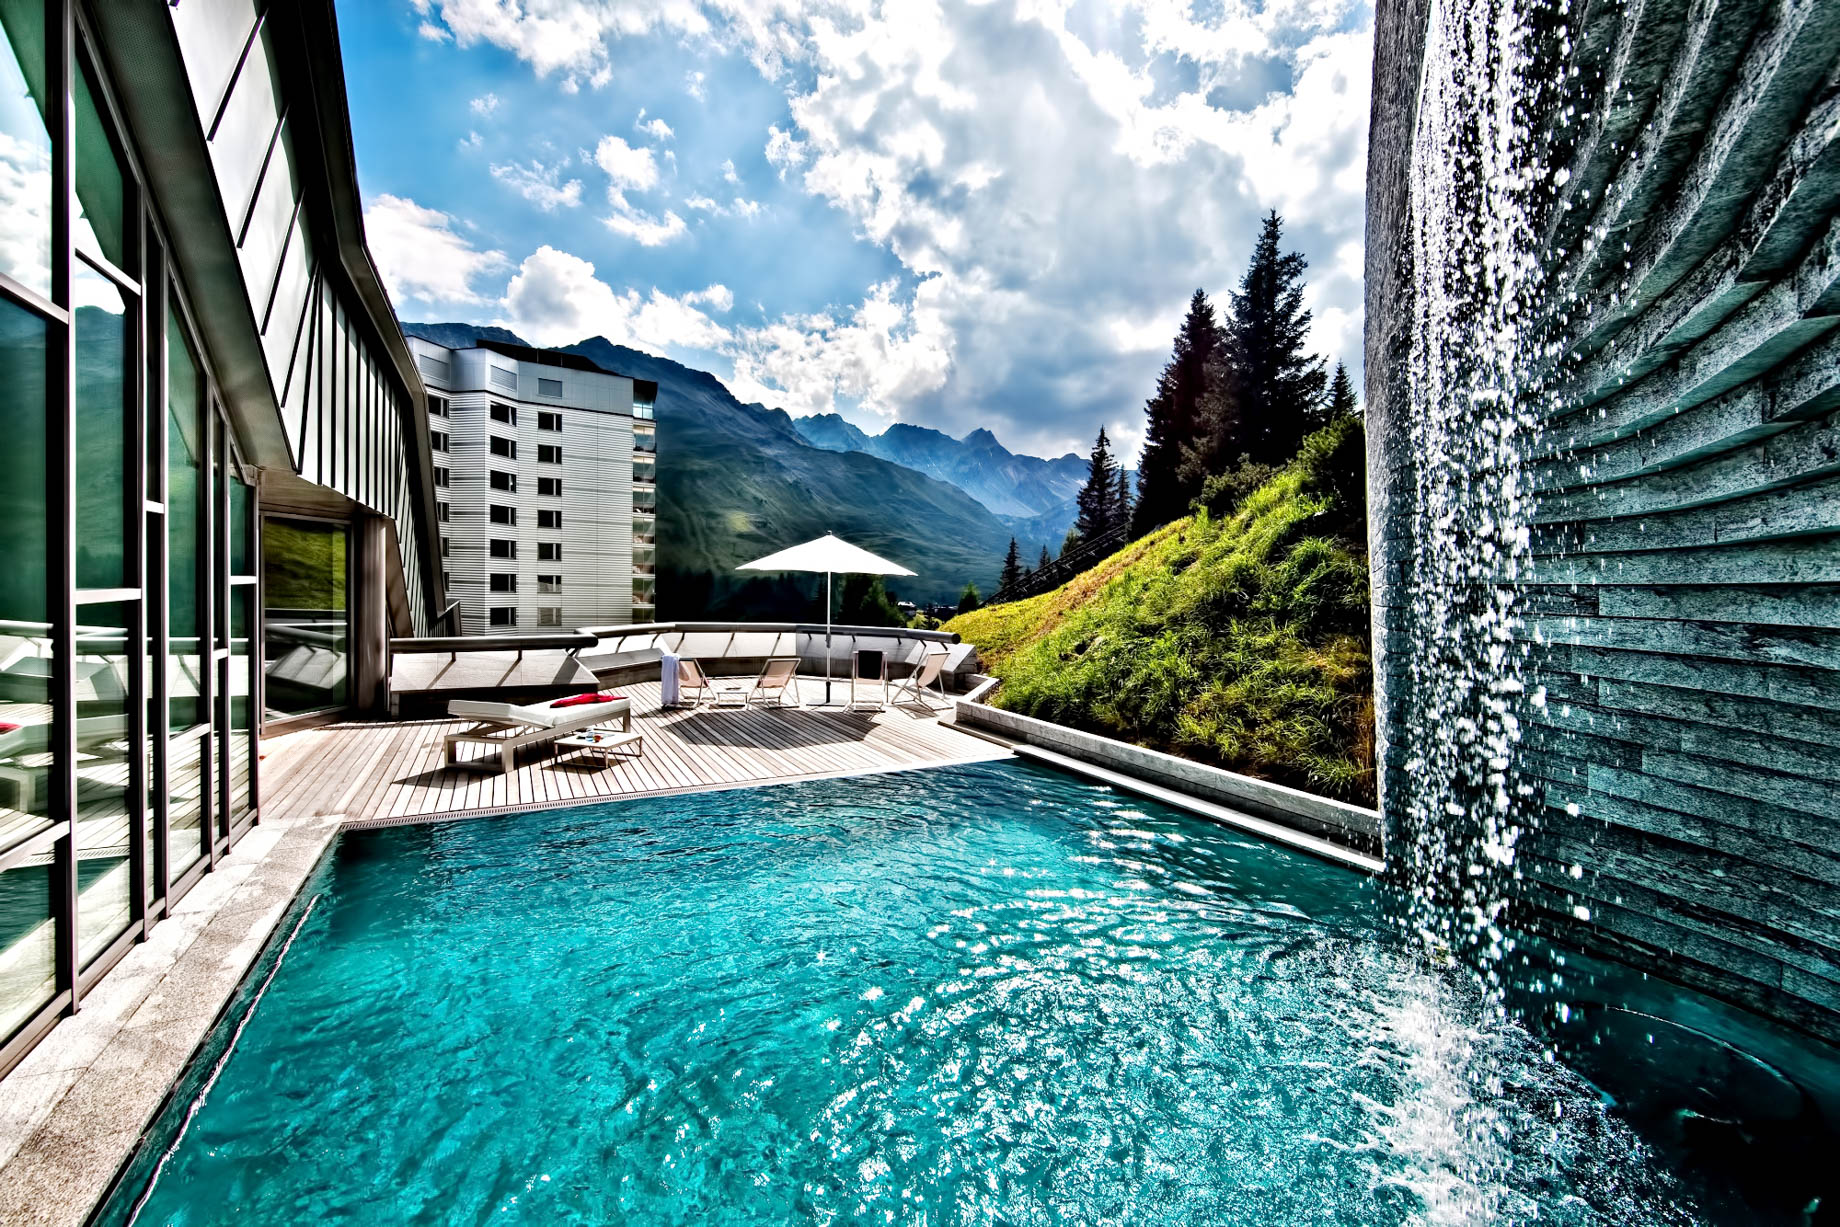 Tschuggen Grand Hotel – Arosa, Switzerland – Outdoor Relaxation Pool